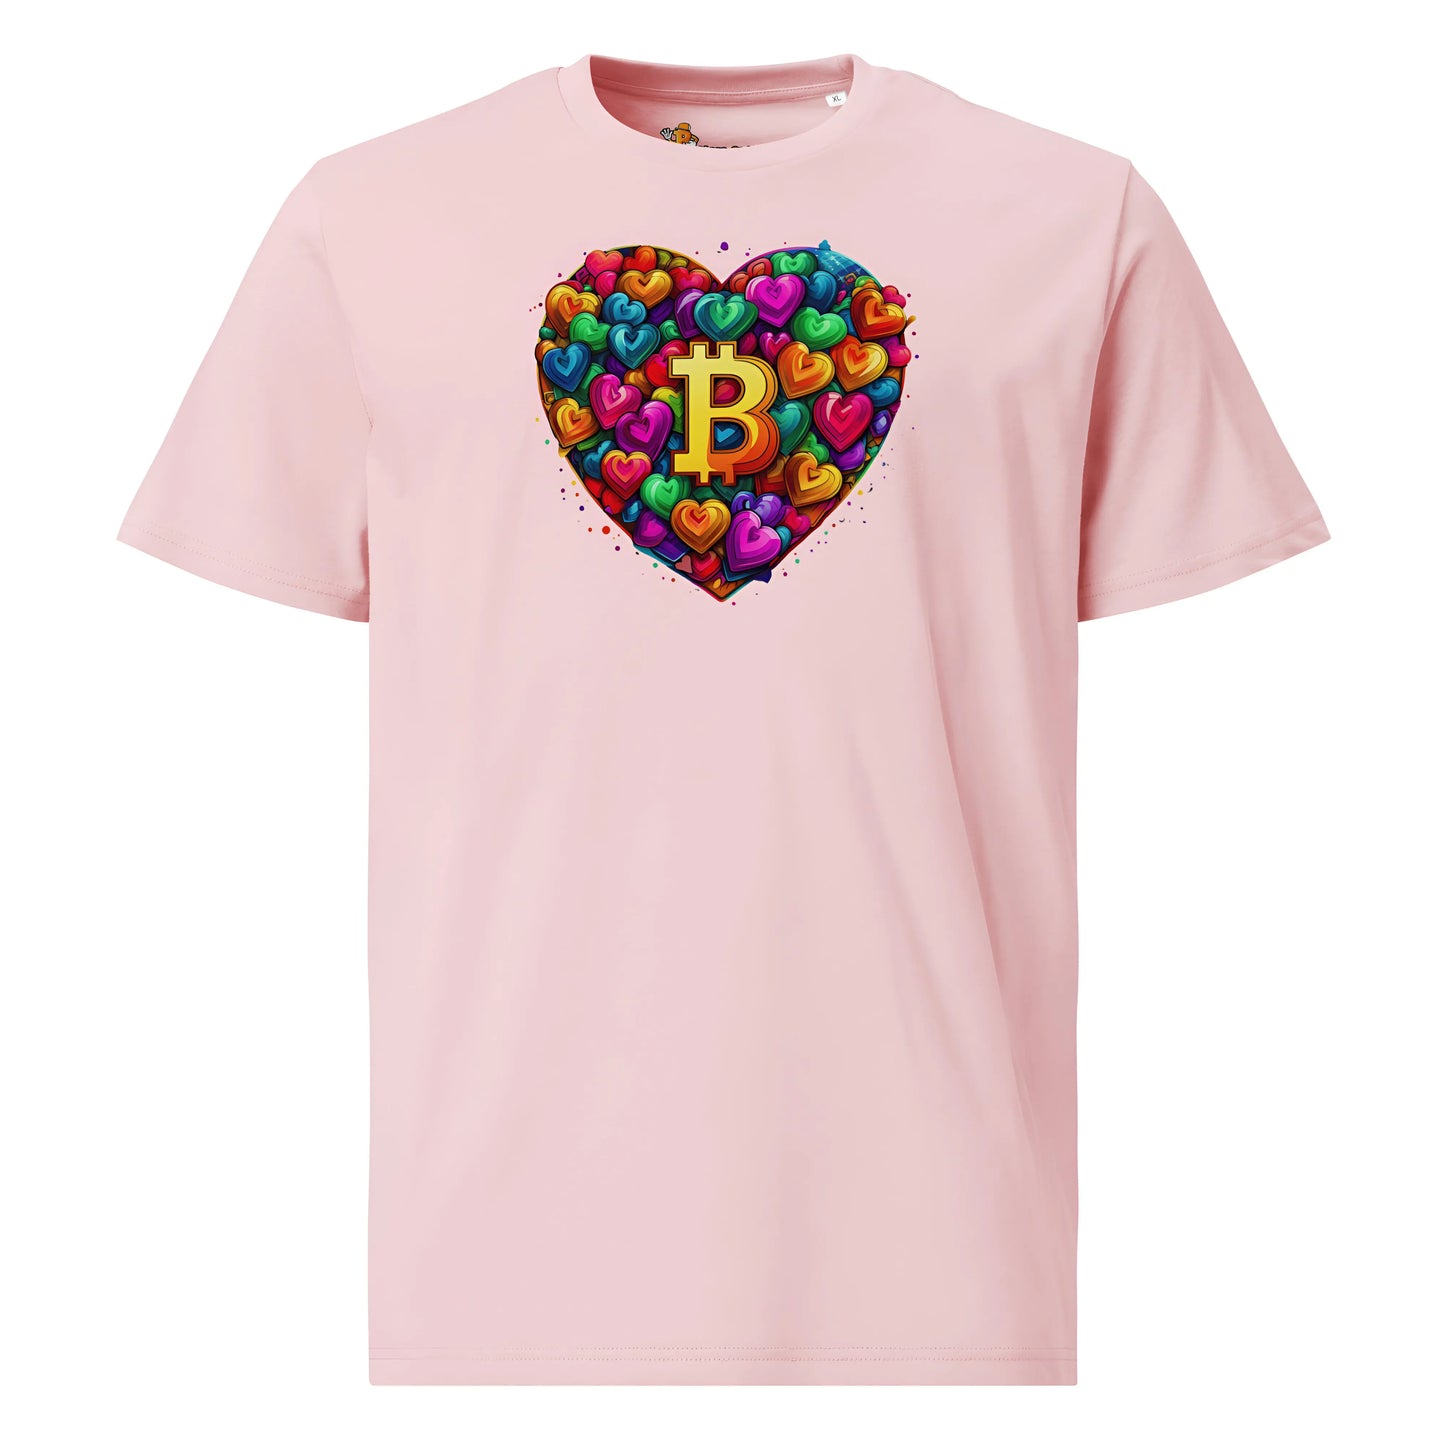 Bitcoin is Love - Premium Unisex Organic Cotton Bitcoin T-shirt Pink Color